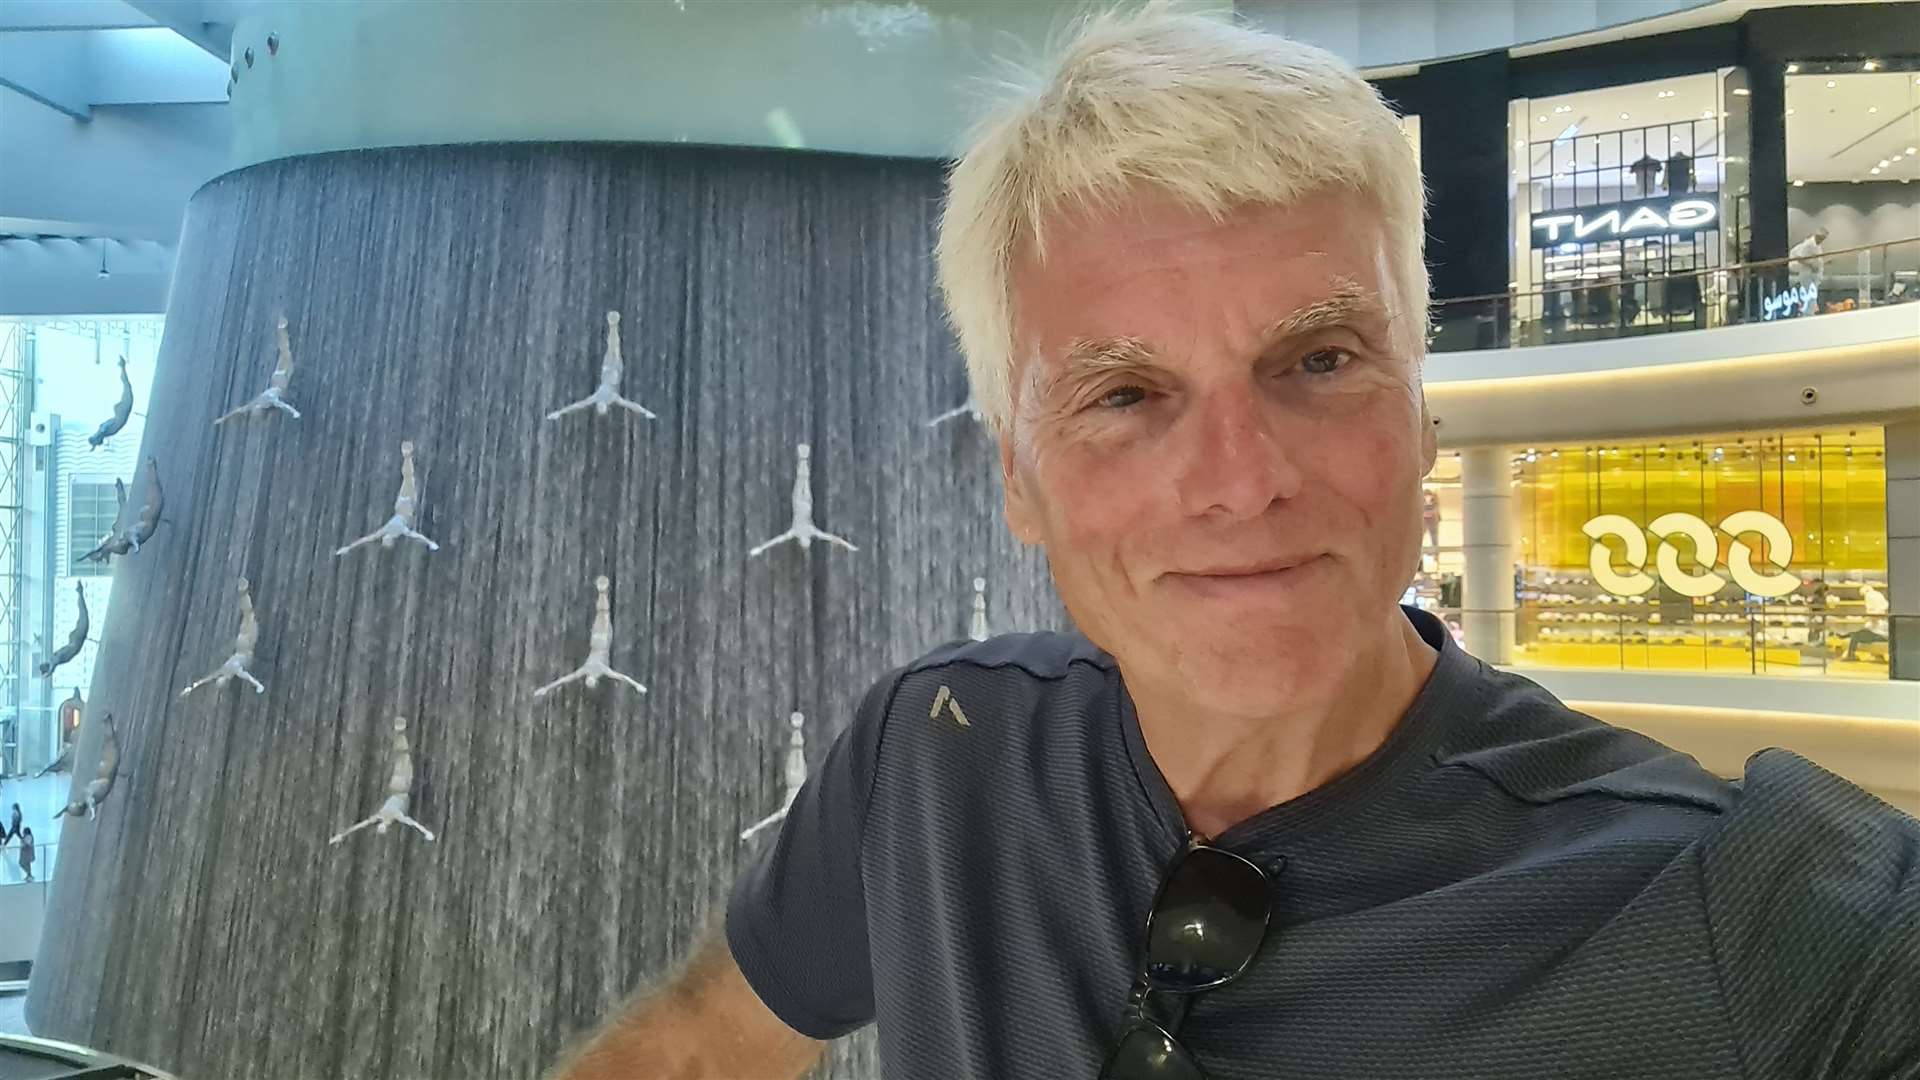 Gerry Warren in the Dubai mall